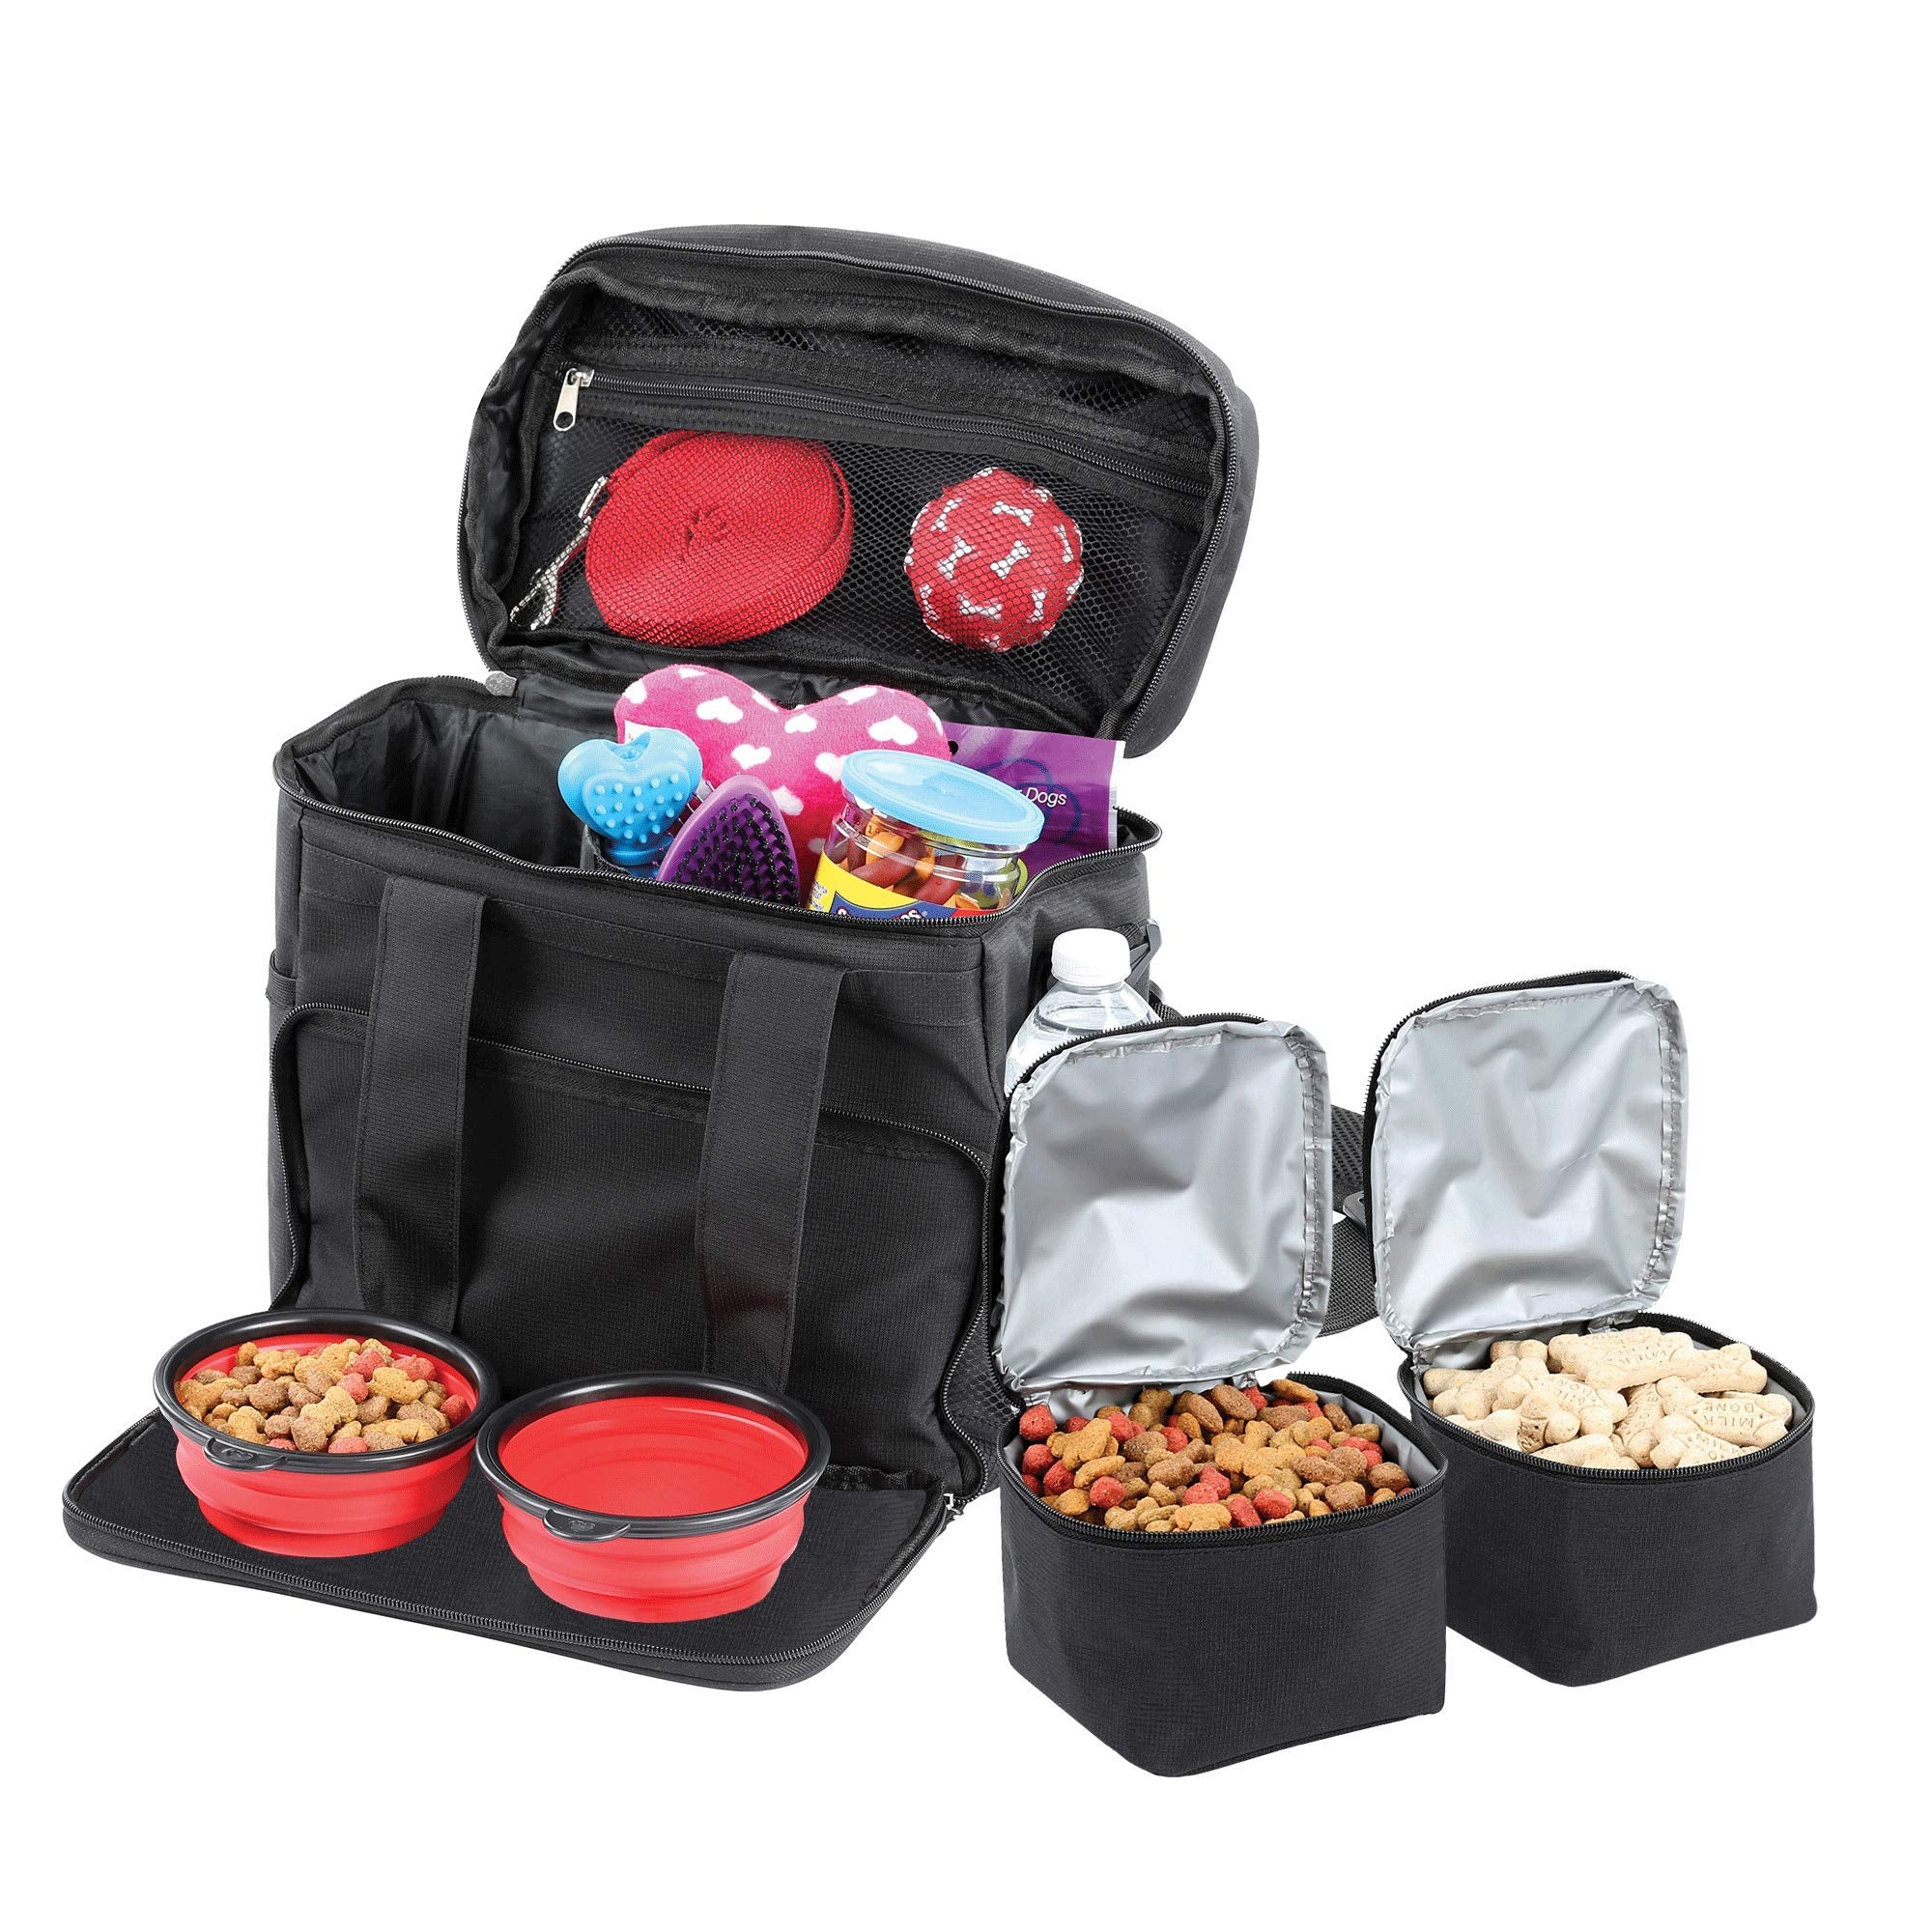 Image of Bundaloo Dog Travel Bag Accessories Supplies Organizer 5-Piece Set with Shoulder Strap